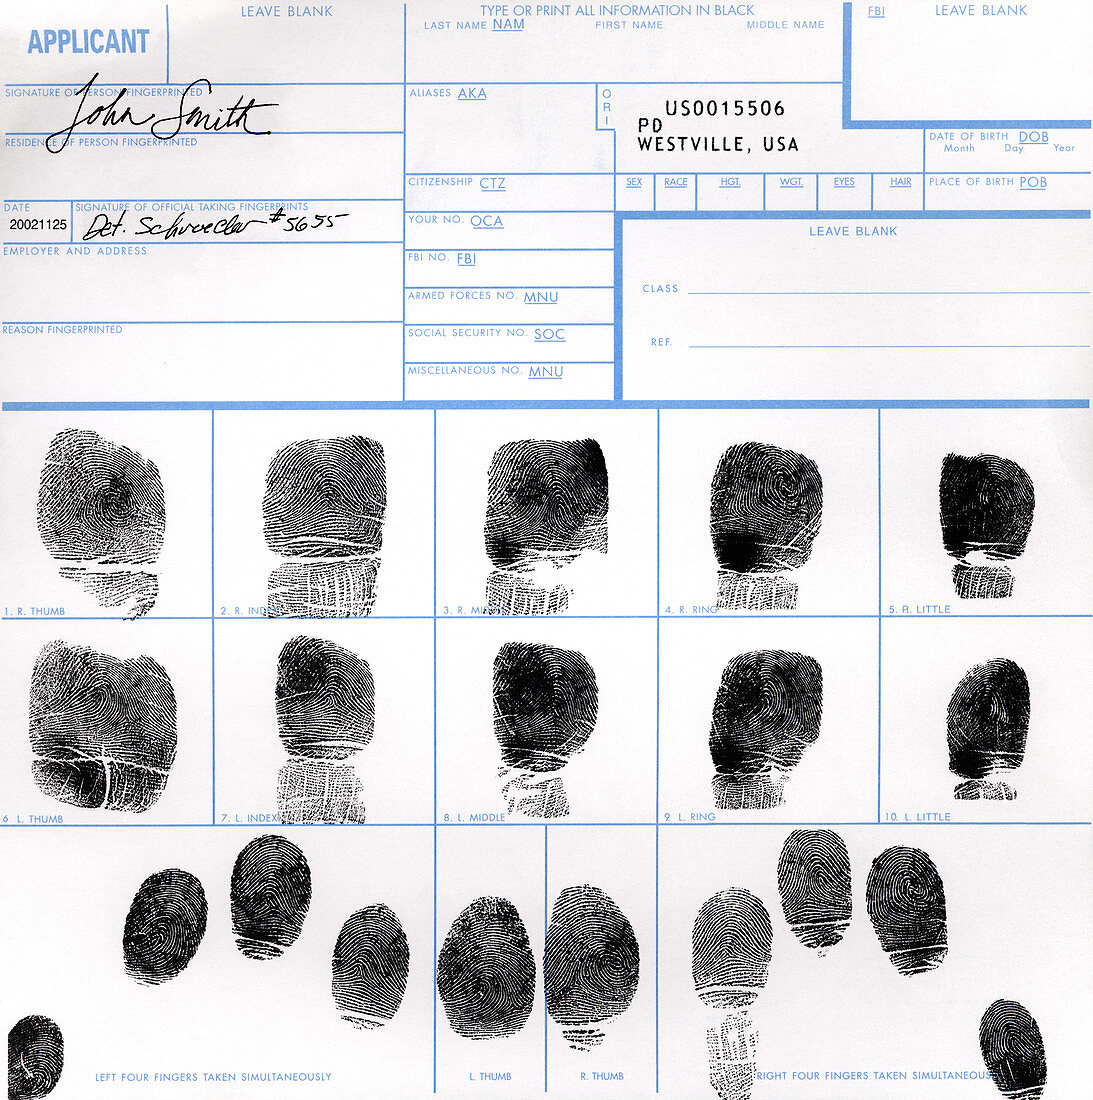 Fingerprint identification application